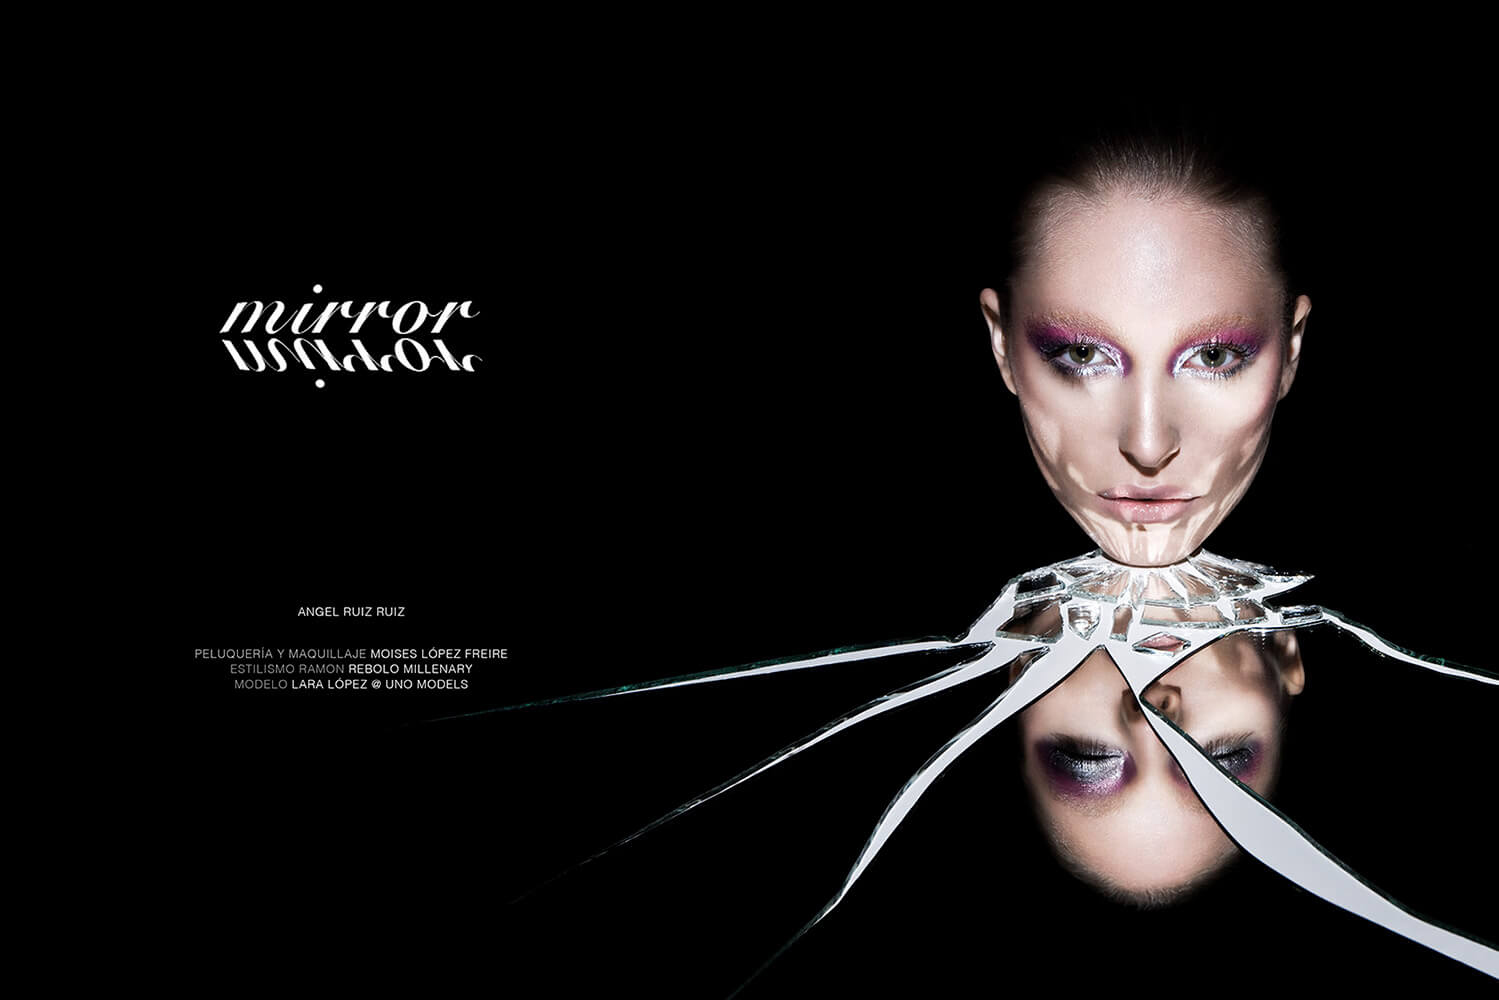 Angel-Ruiz-Ruiz-editorial-Beauty-mirror-mirror-Magazine-avenue-illustrated-queen-broken-cover-text-1359x1000